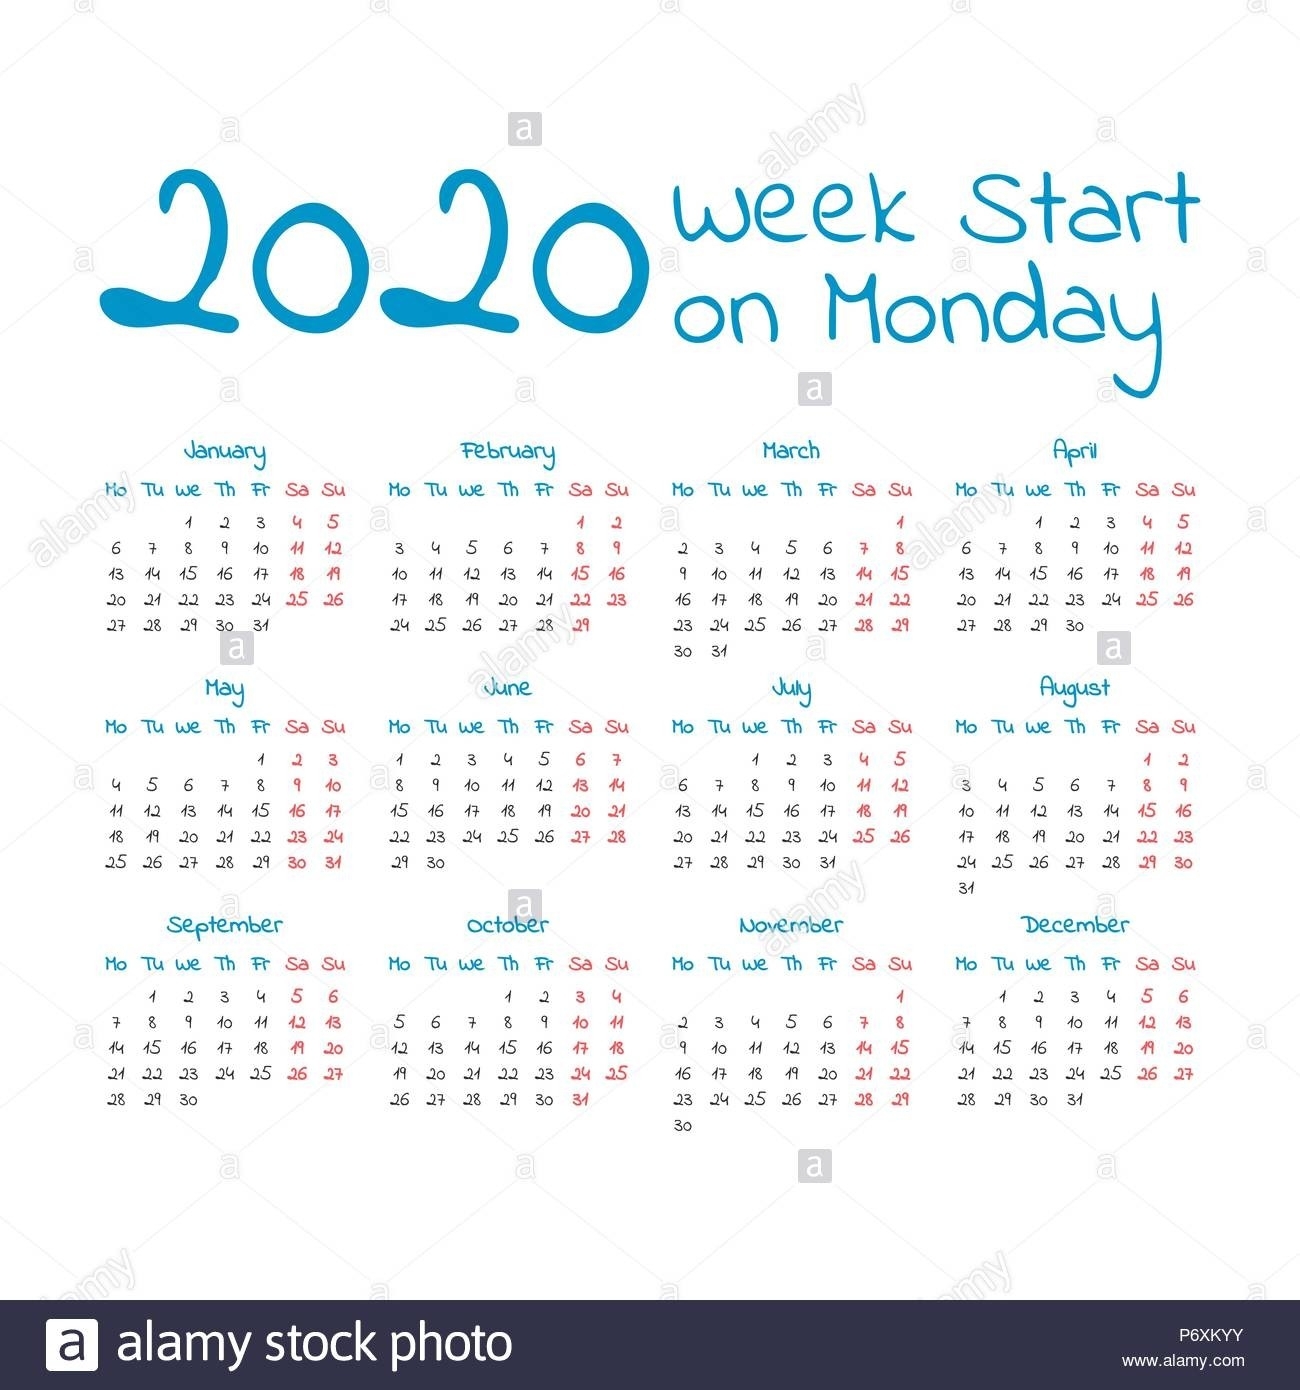 2020 Calendar Starting Monday | Teekayshippingcorporation within 2020 Calendar That Begins On Monday